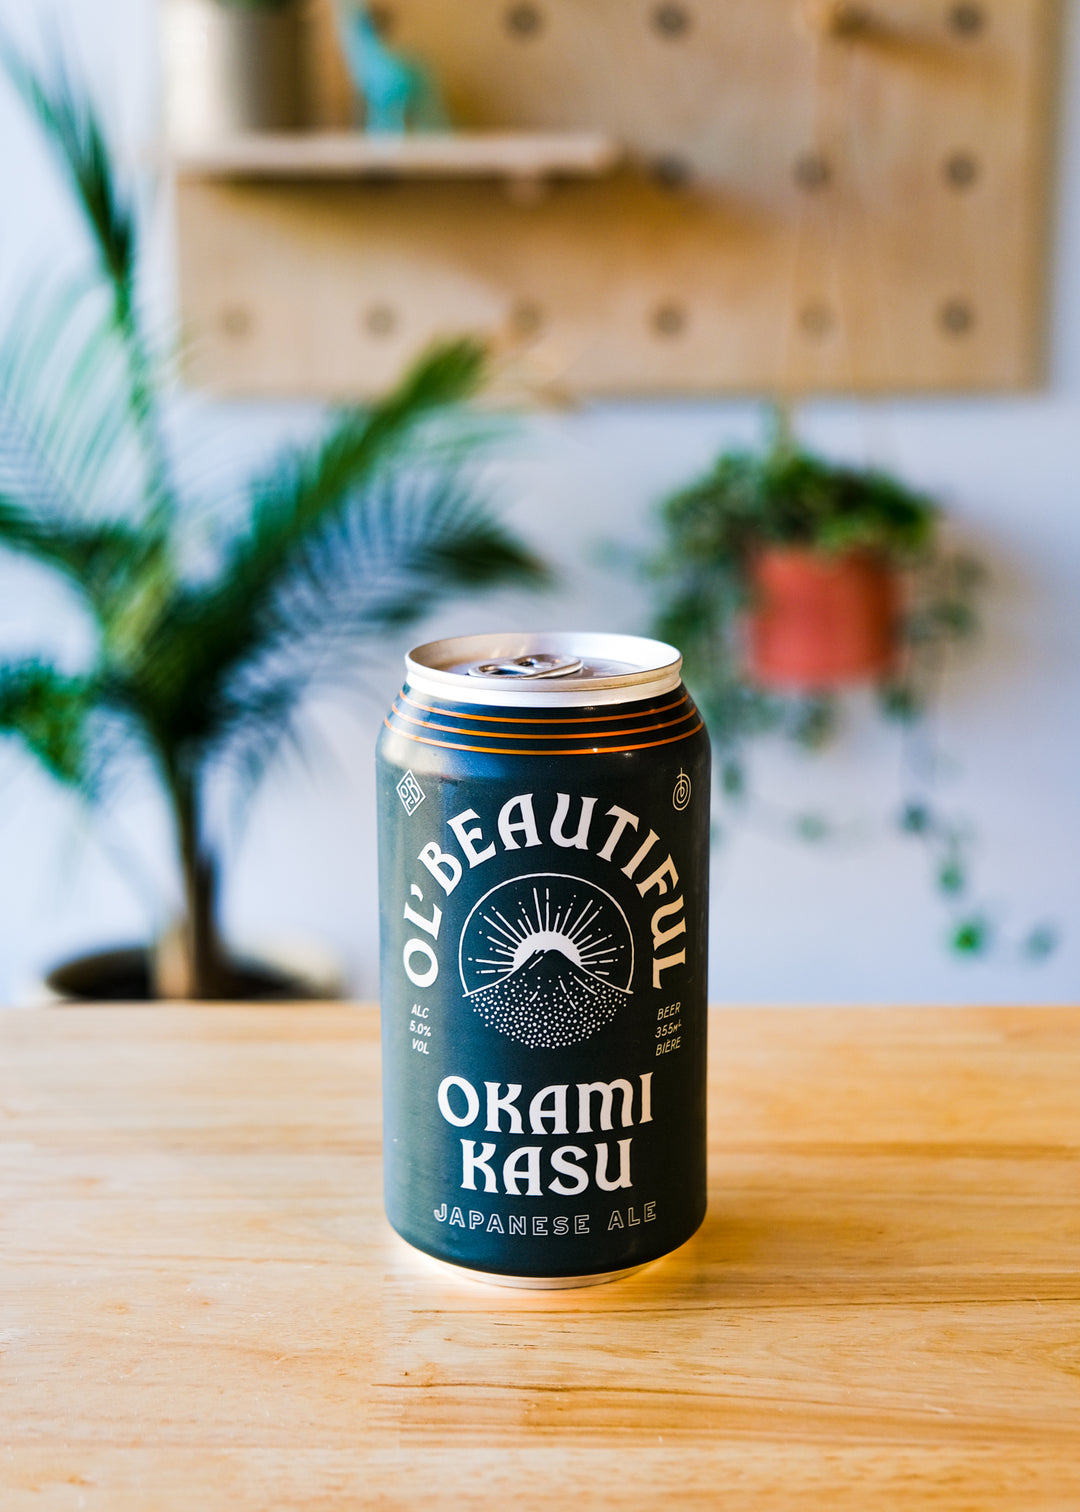 OKAMI KASU | Japanese Ale